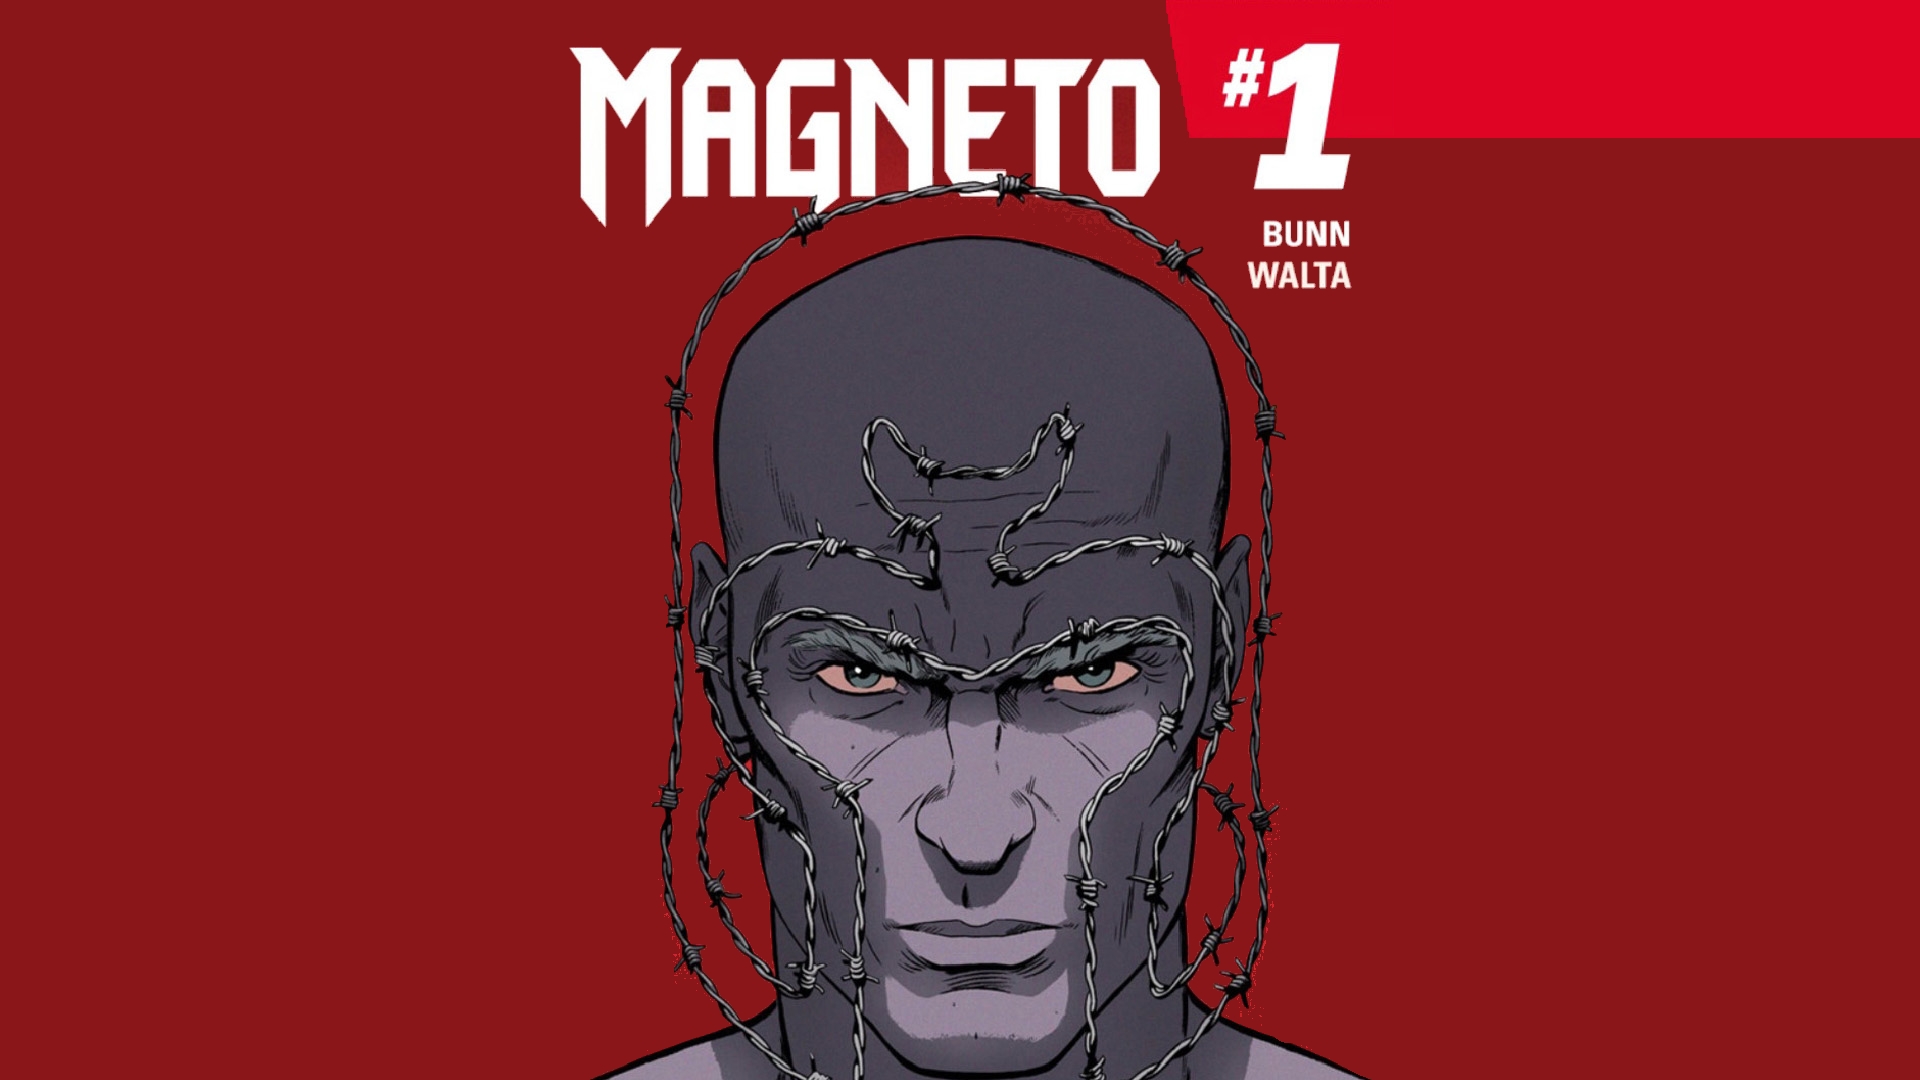 321135 Bild herunterladen comics, magnet, magneto (marvel comics), x men - Hintergrundbilder und Bildschirmschoner kostenlos